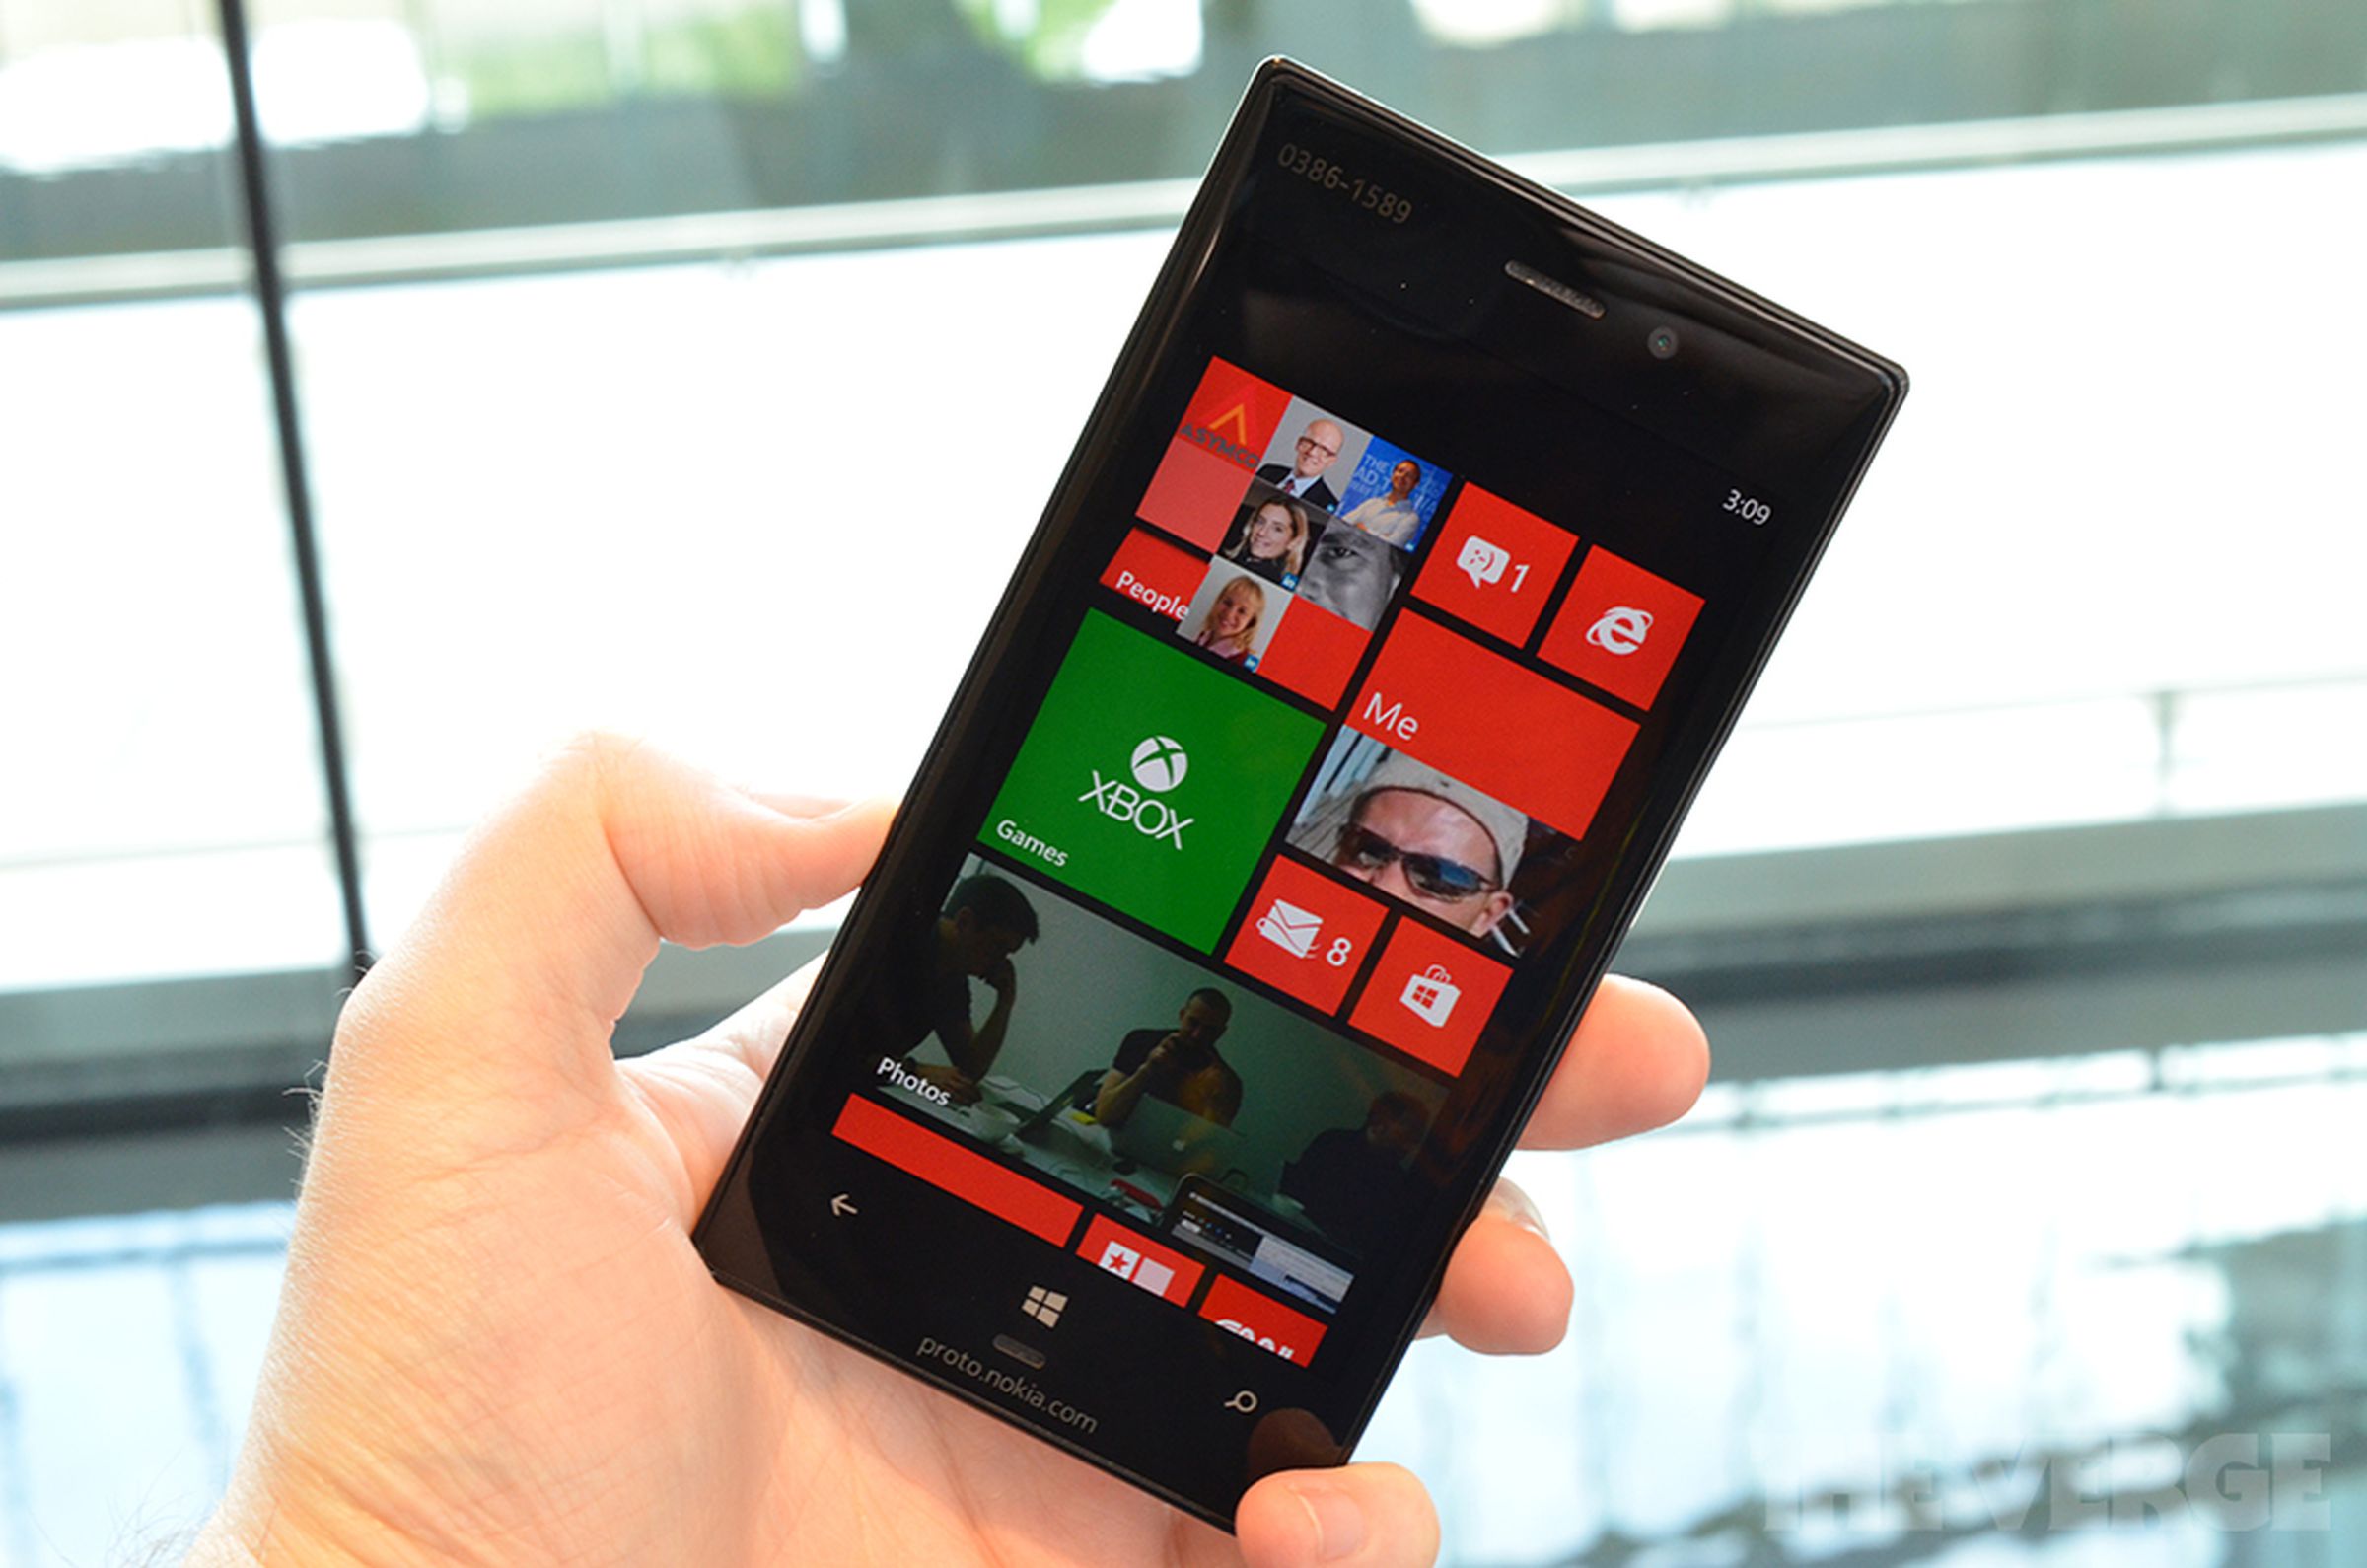 Nokia Lumia 928 hands-on photos